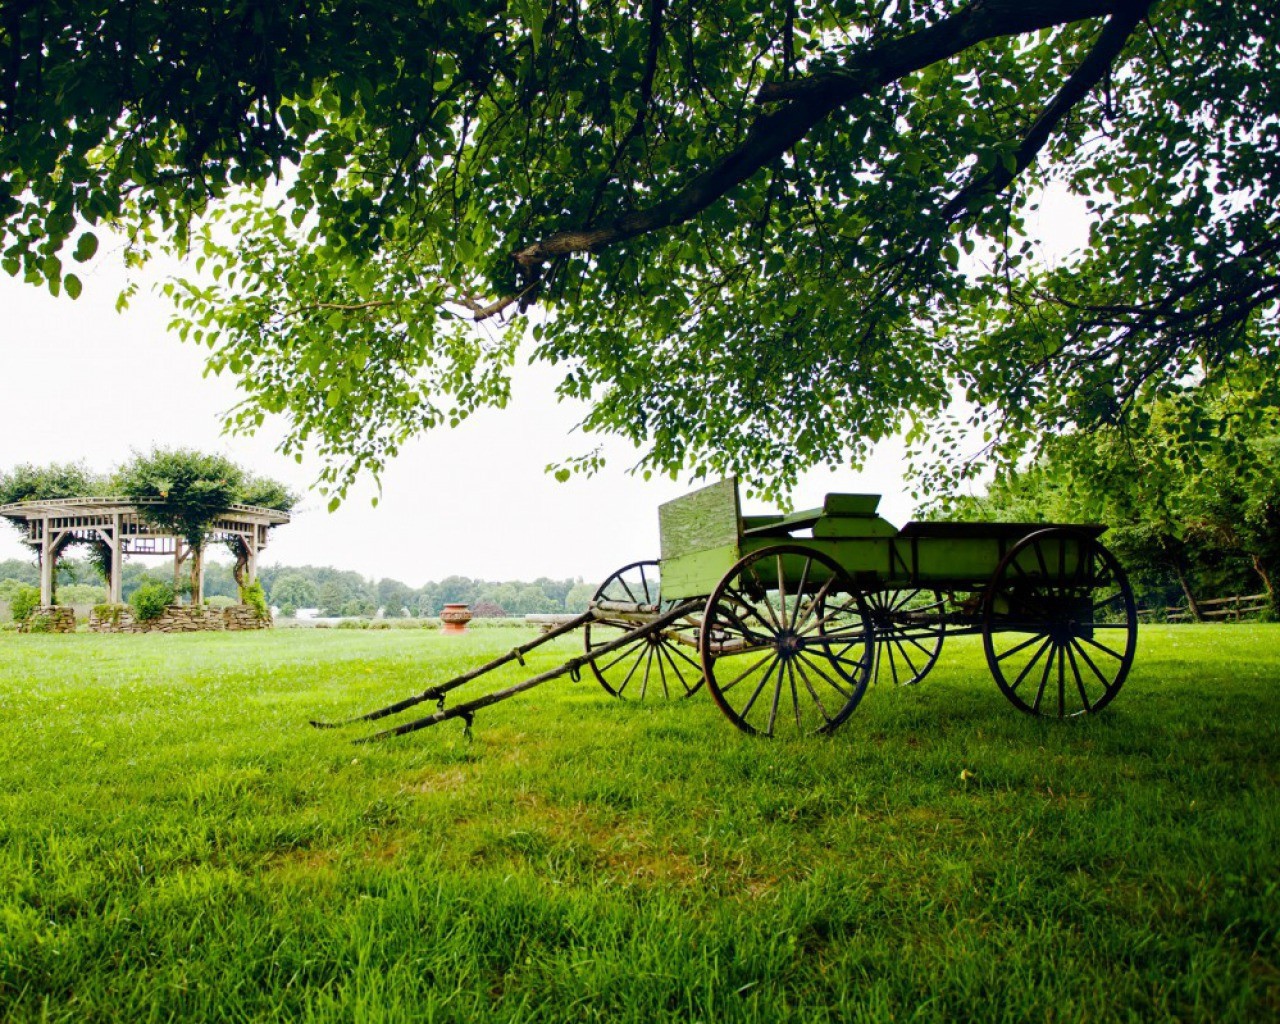 Landscape with a cart